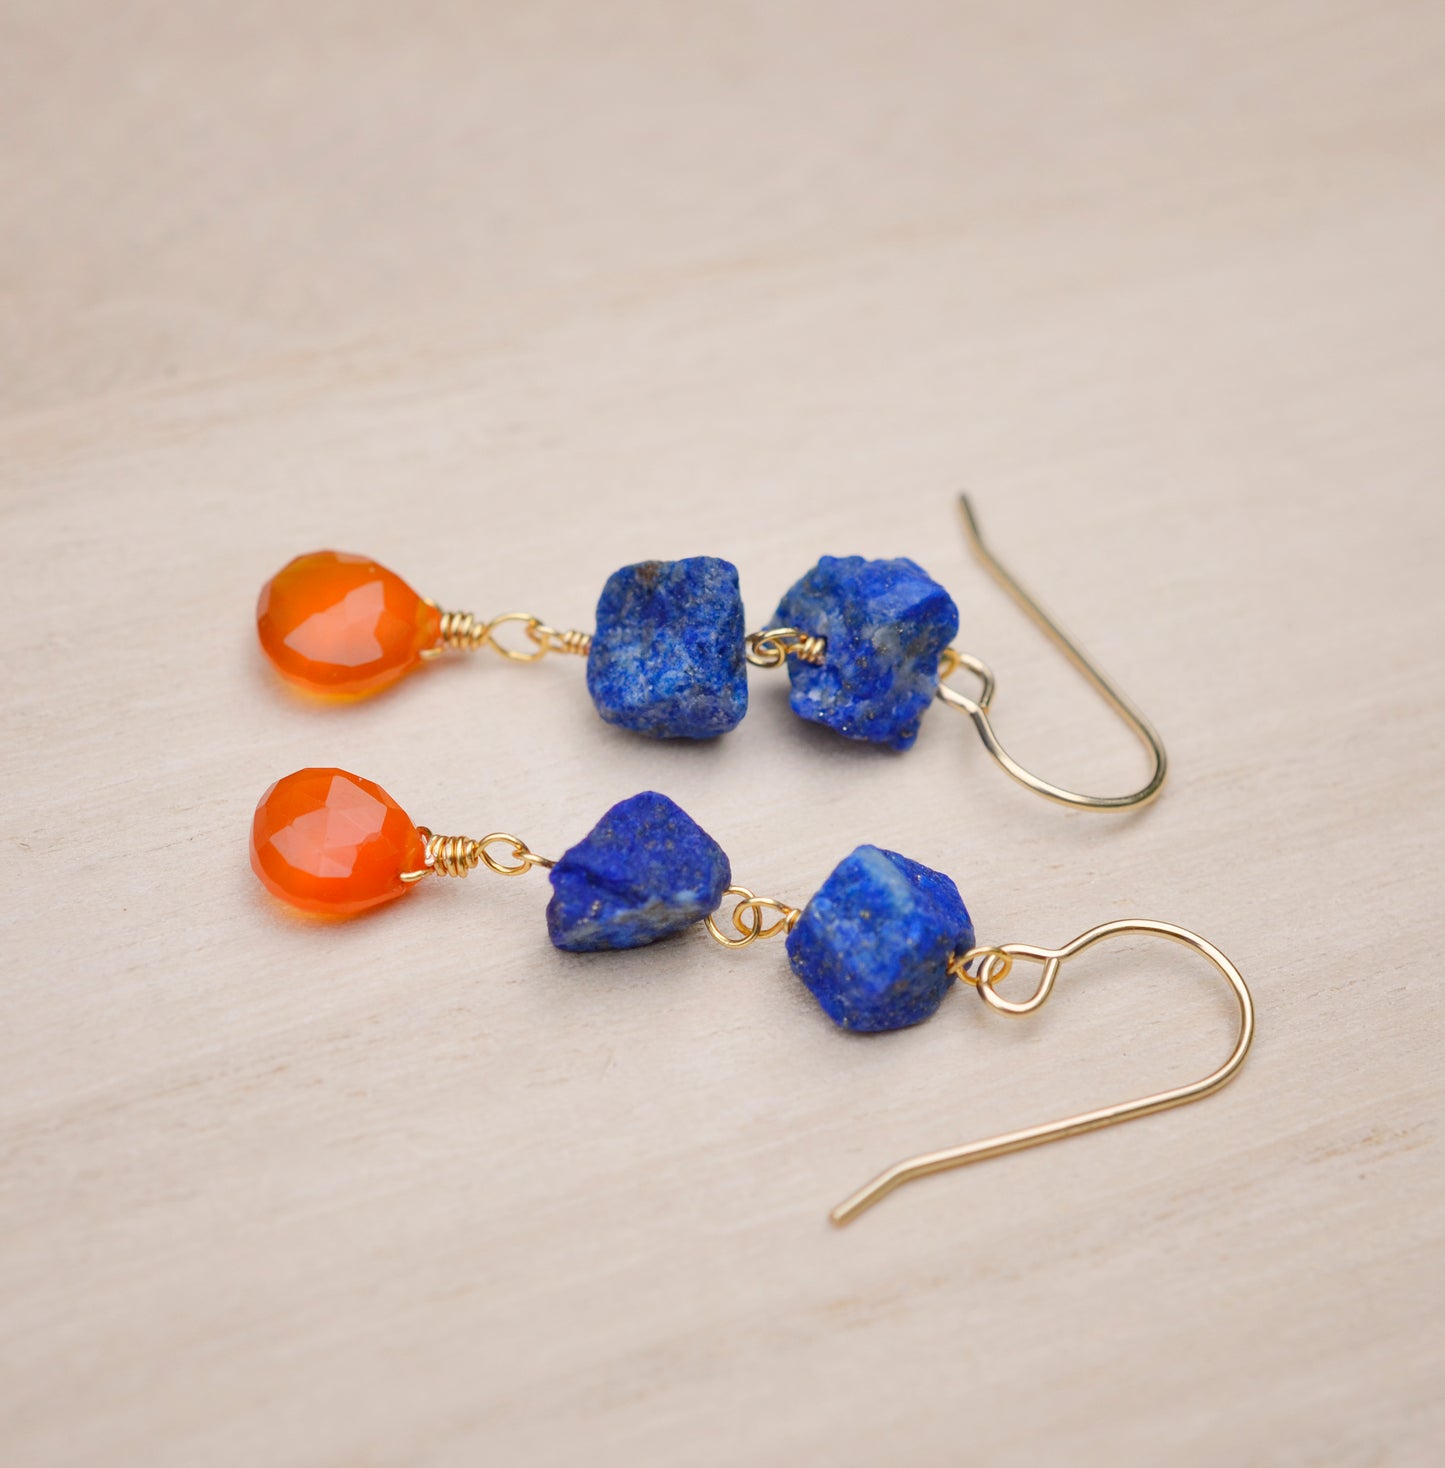 Lapis Lazuli and Carnelian Earrings, Raw Lapis Carnelian Dangles, Crystal Earrings, Sterling Silver or Gold Filled